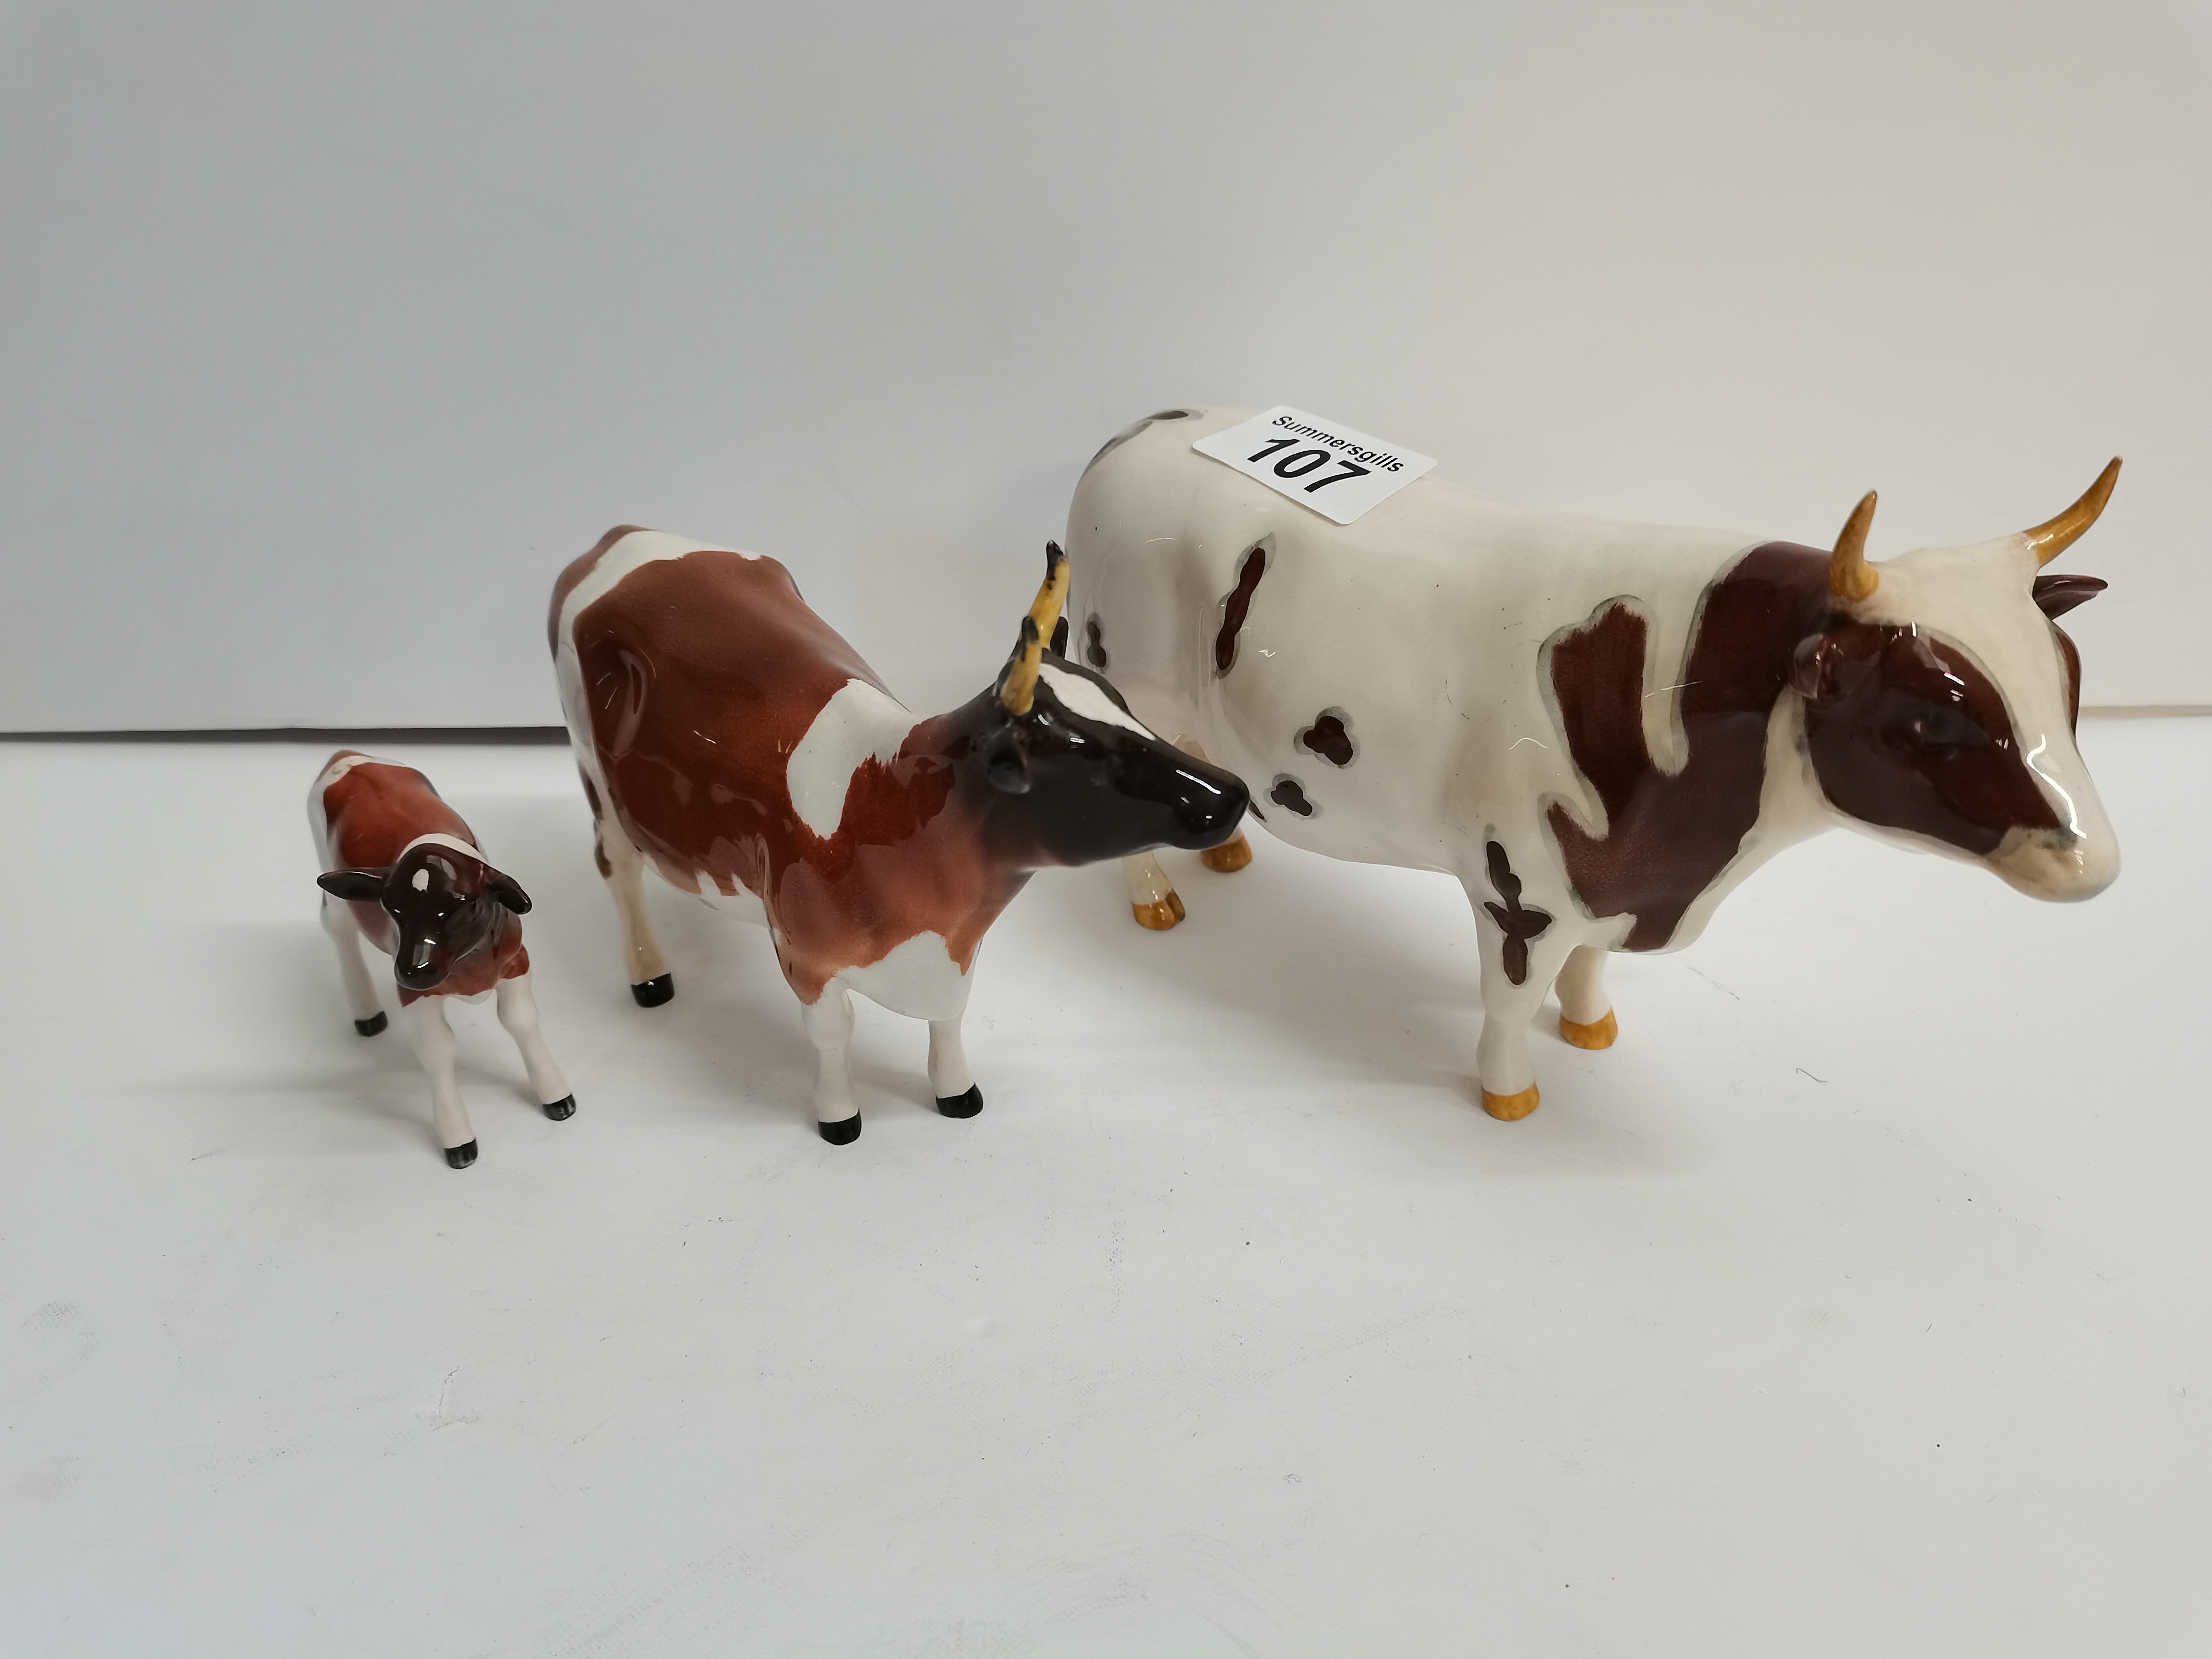 A trio of Ayrshire cows